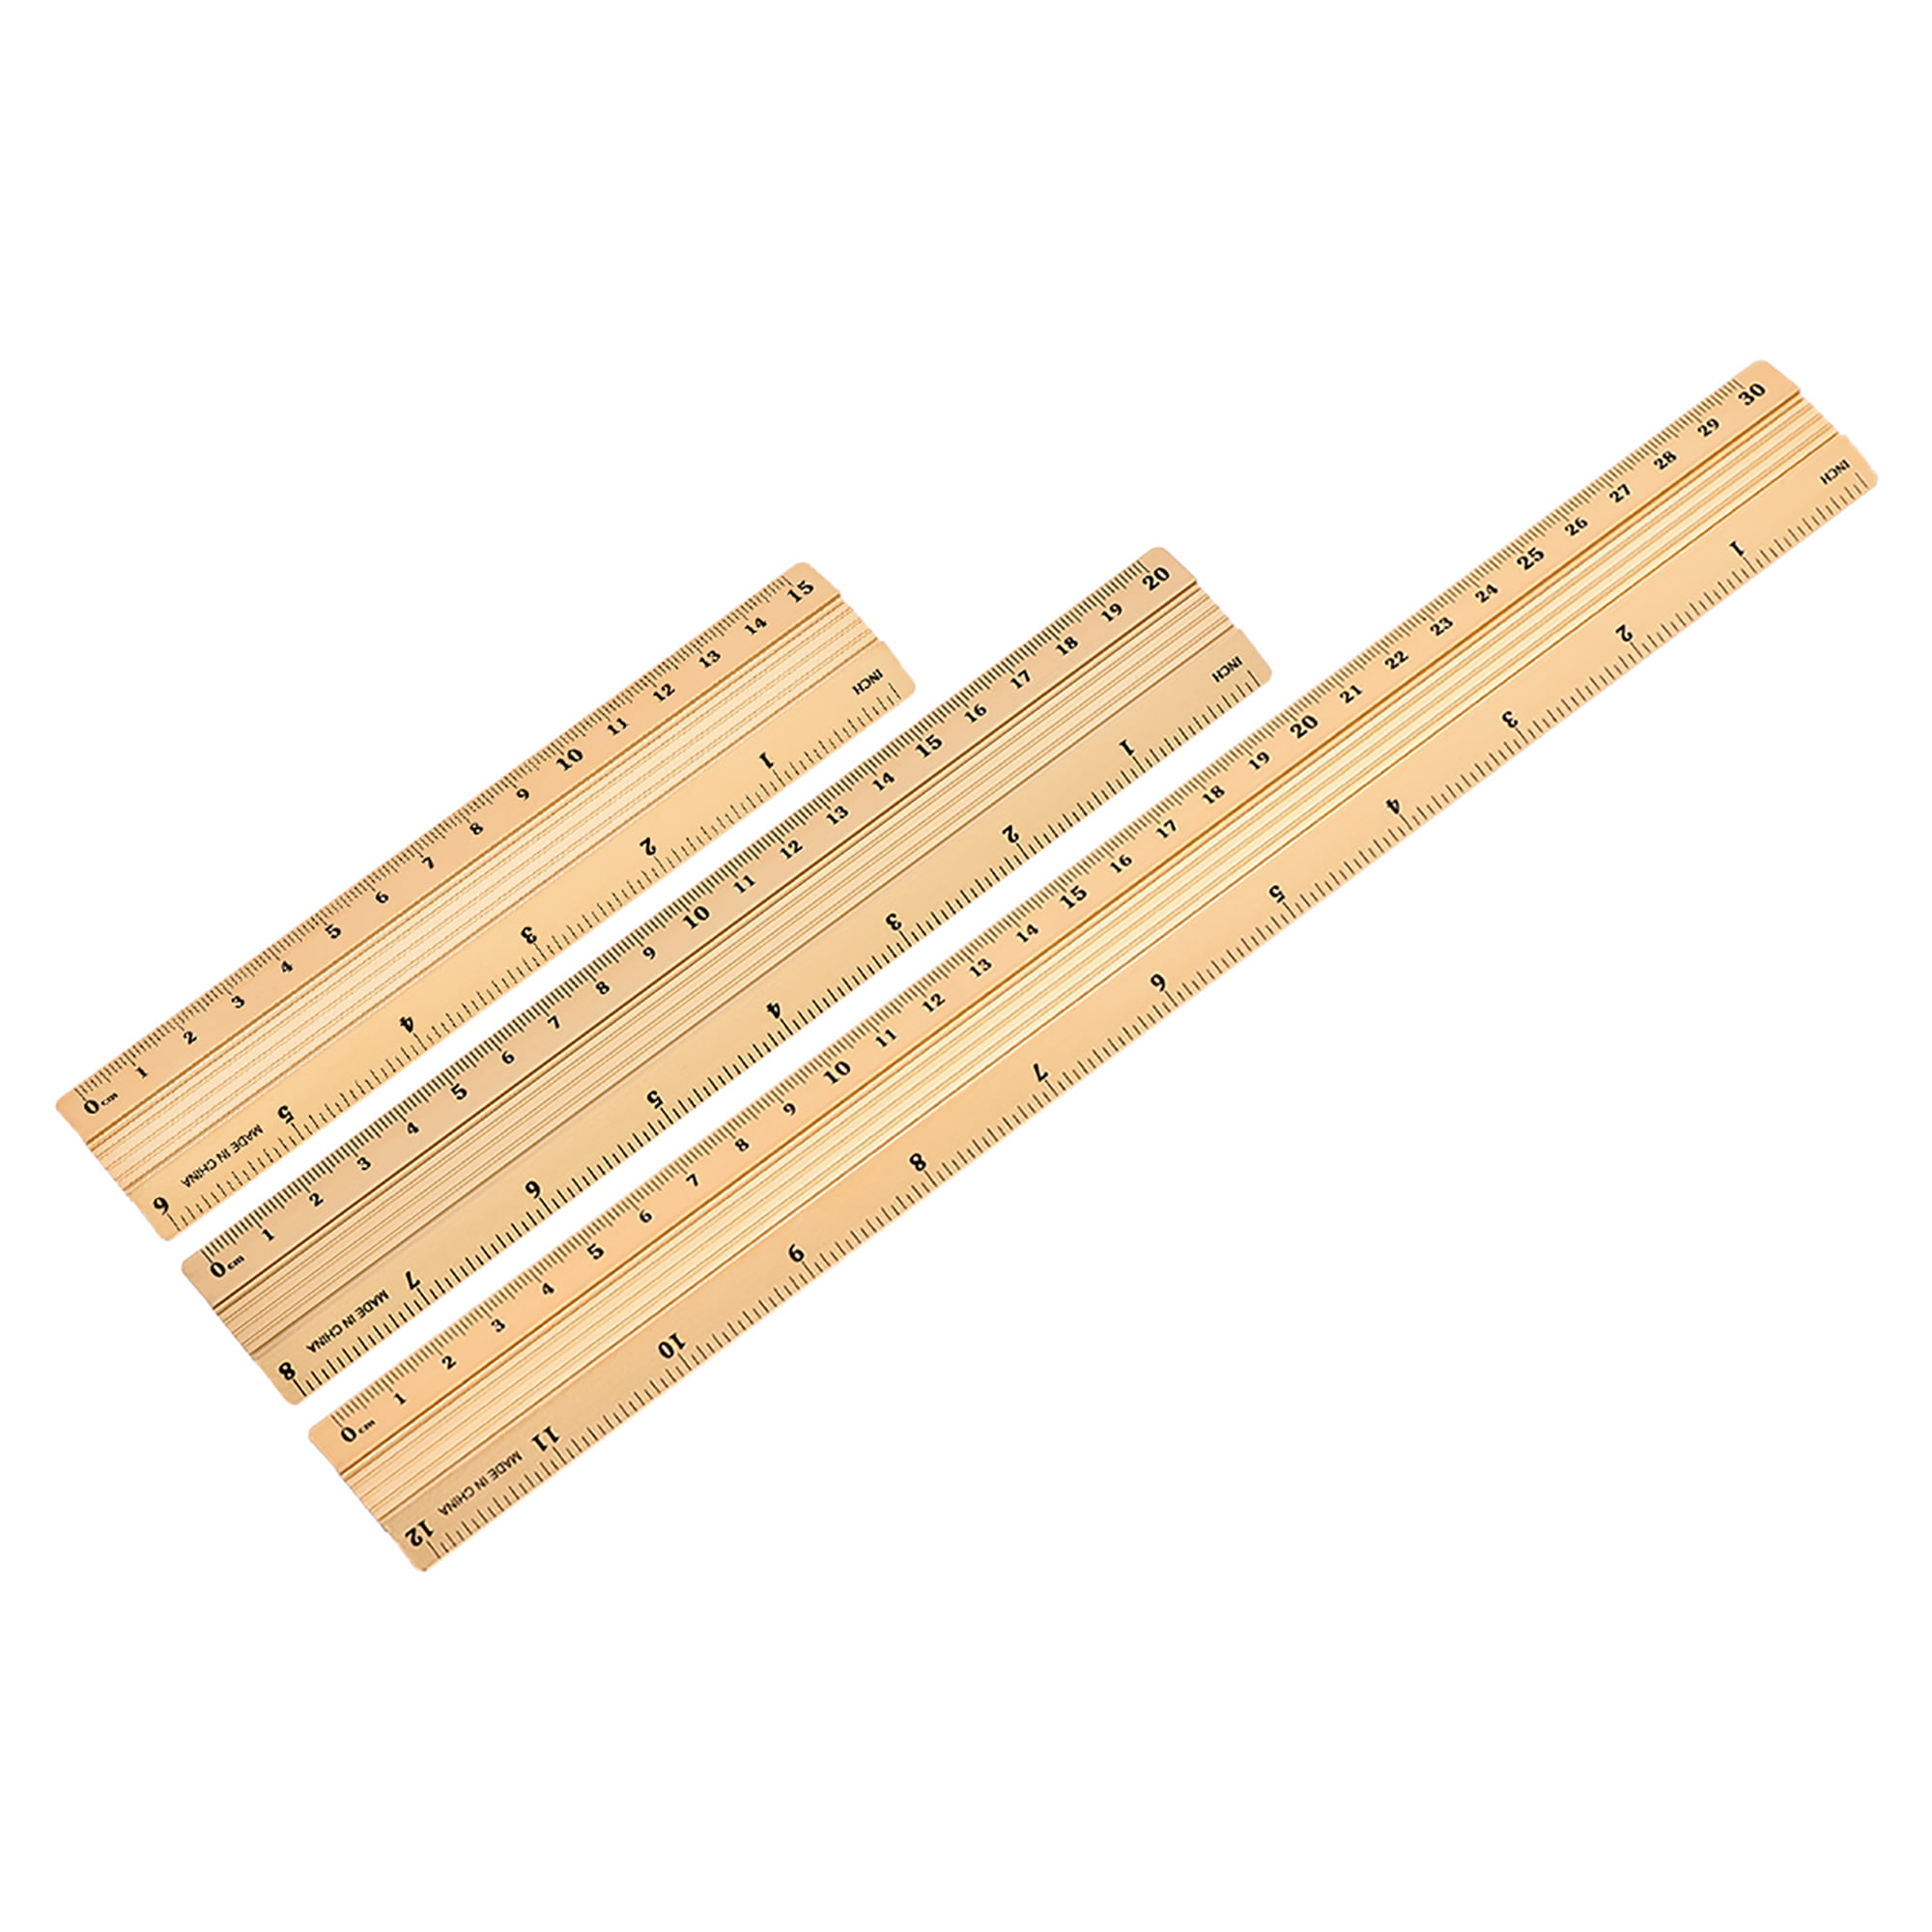 inch ruler